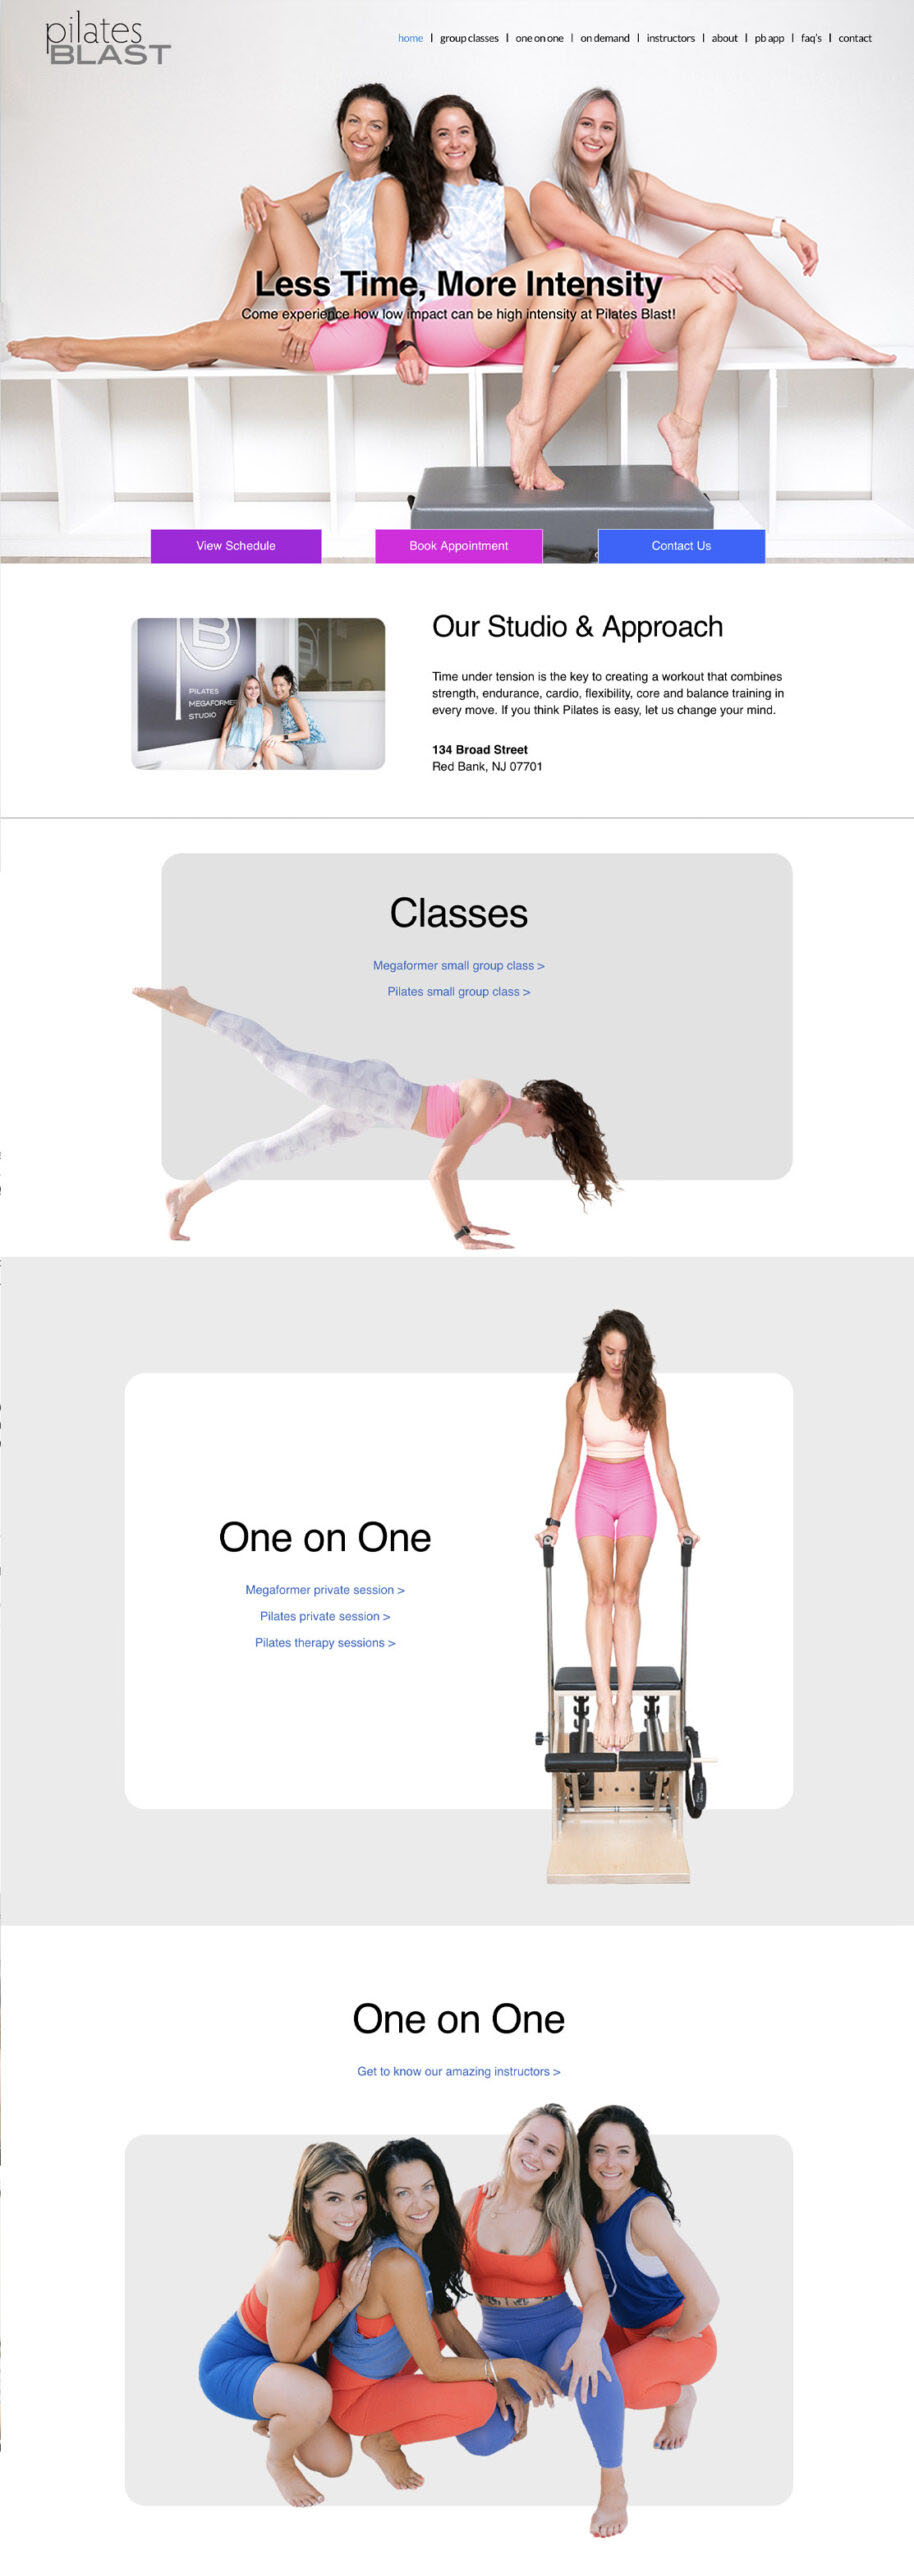 Wordpress Website designed and build for pilates studio